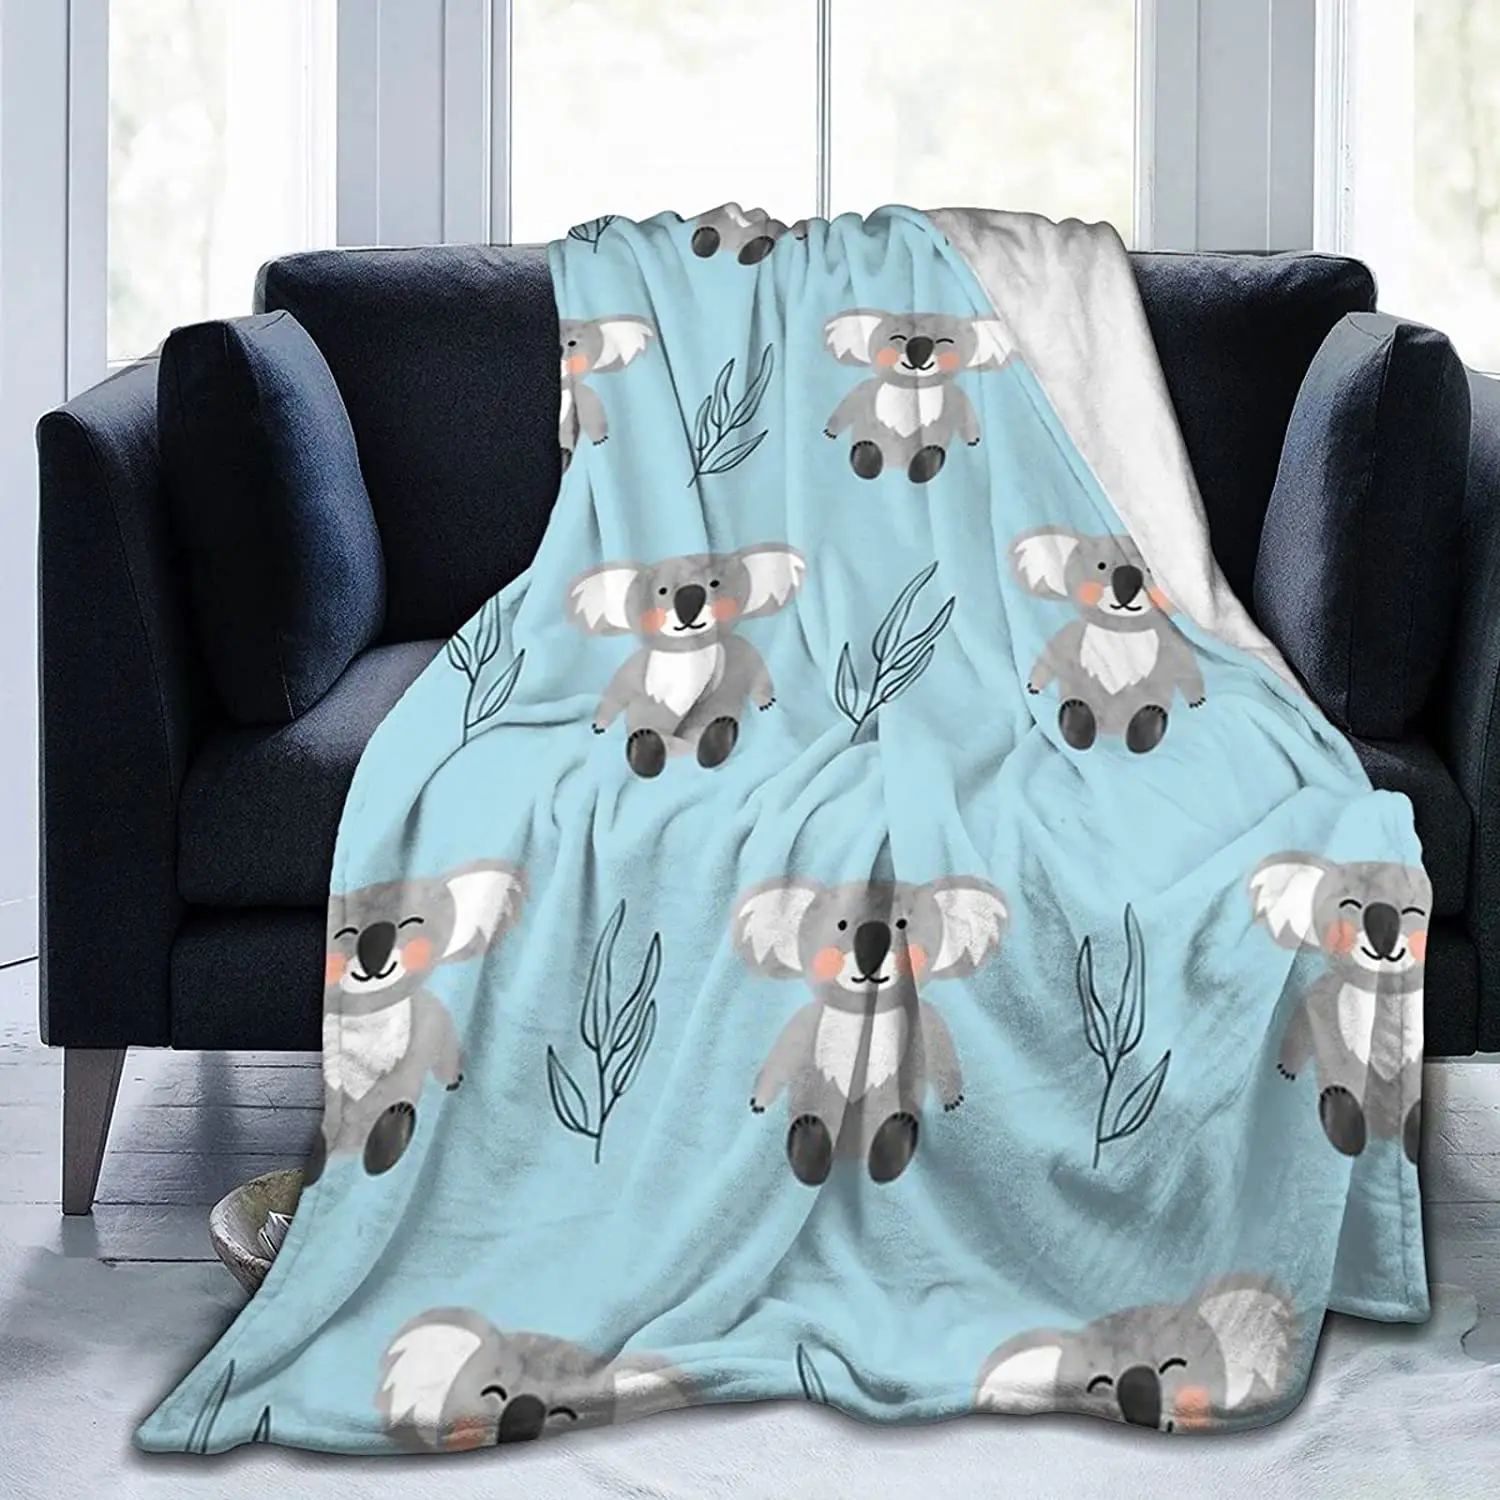 

Flannel Fleece Modern Throw Blanket, Cartoon Style Cute Koala Bears Funny Animal Blue Pattern Throw for Spring Recliner